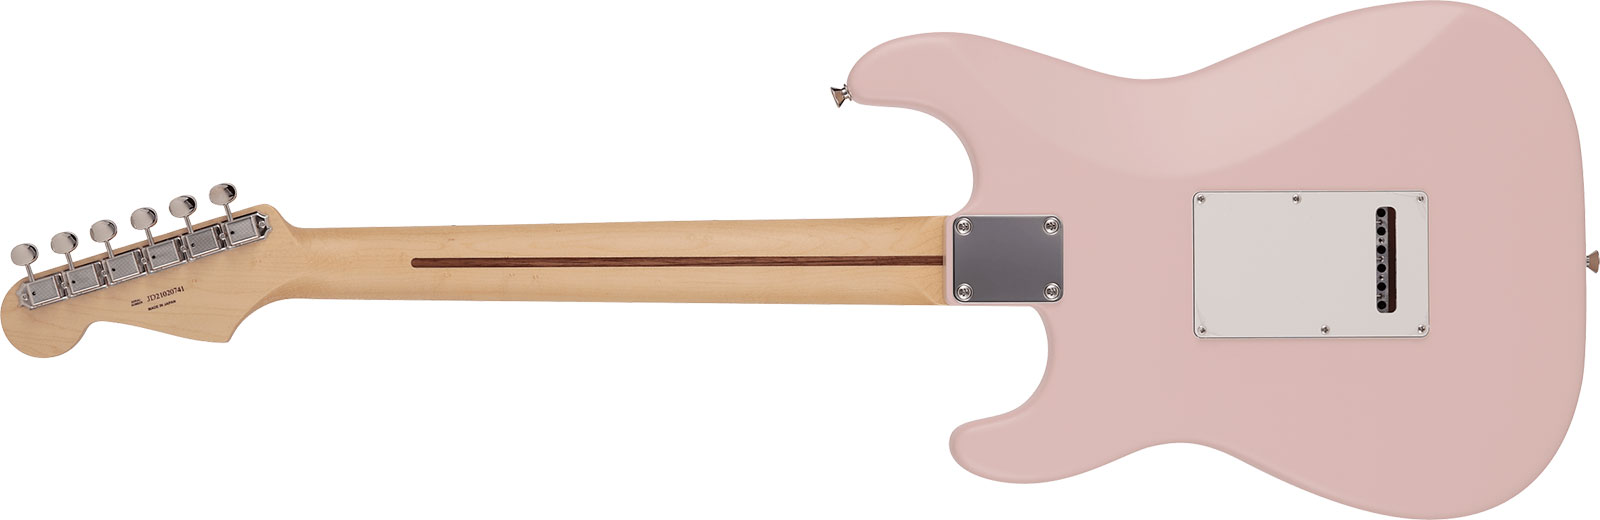 Fender Strat Junior Mij Jap 3s Trem Rw - Satin Shell Pink - Guitarra eléctrica para niños - Variation 1